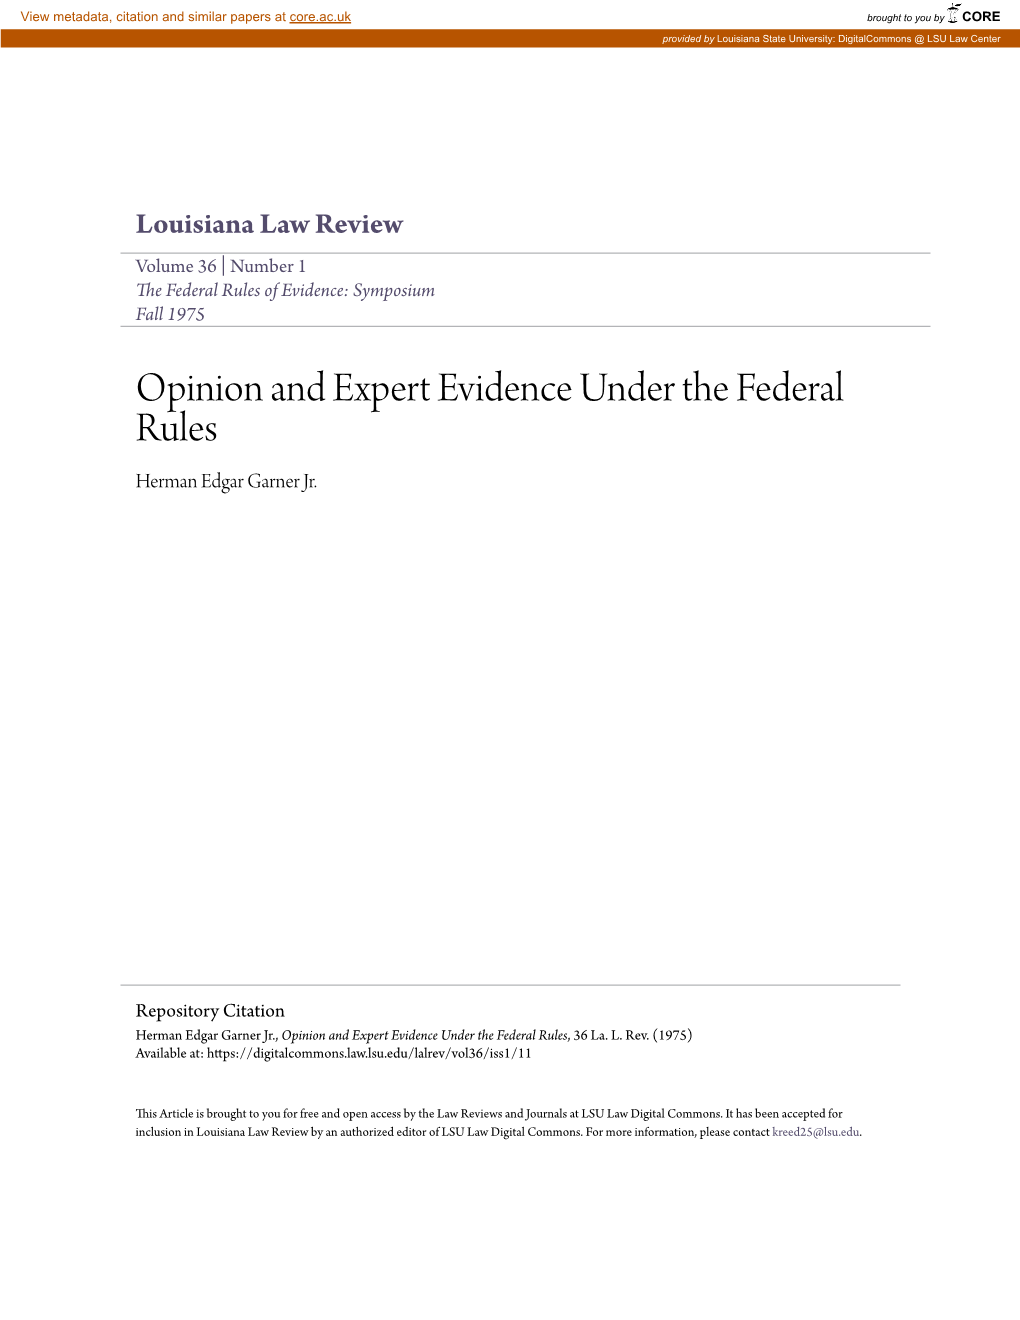 Opinion and Expert Evidence Under the Federal Rules Herman Edgar Garner Jr